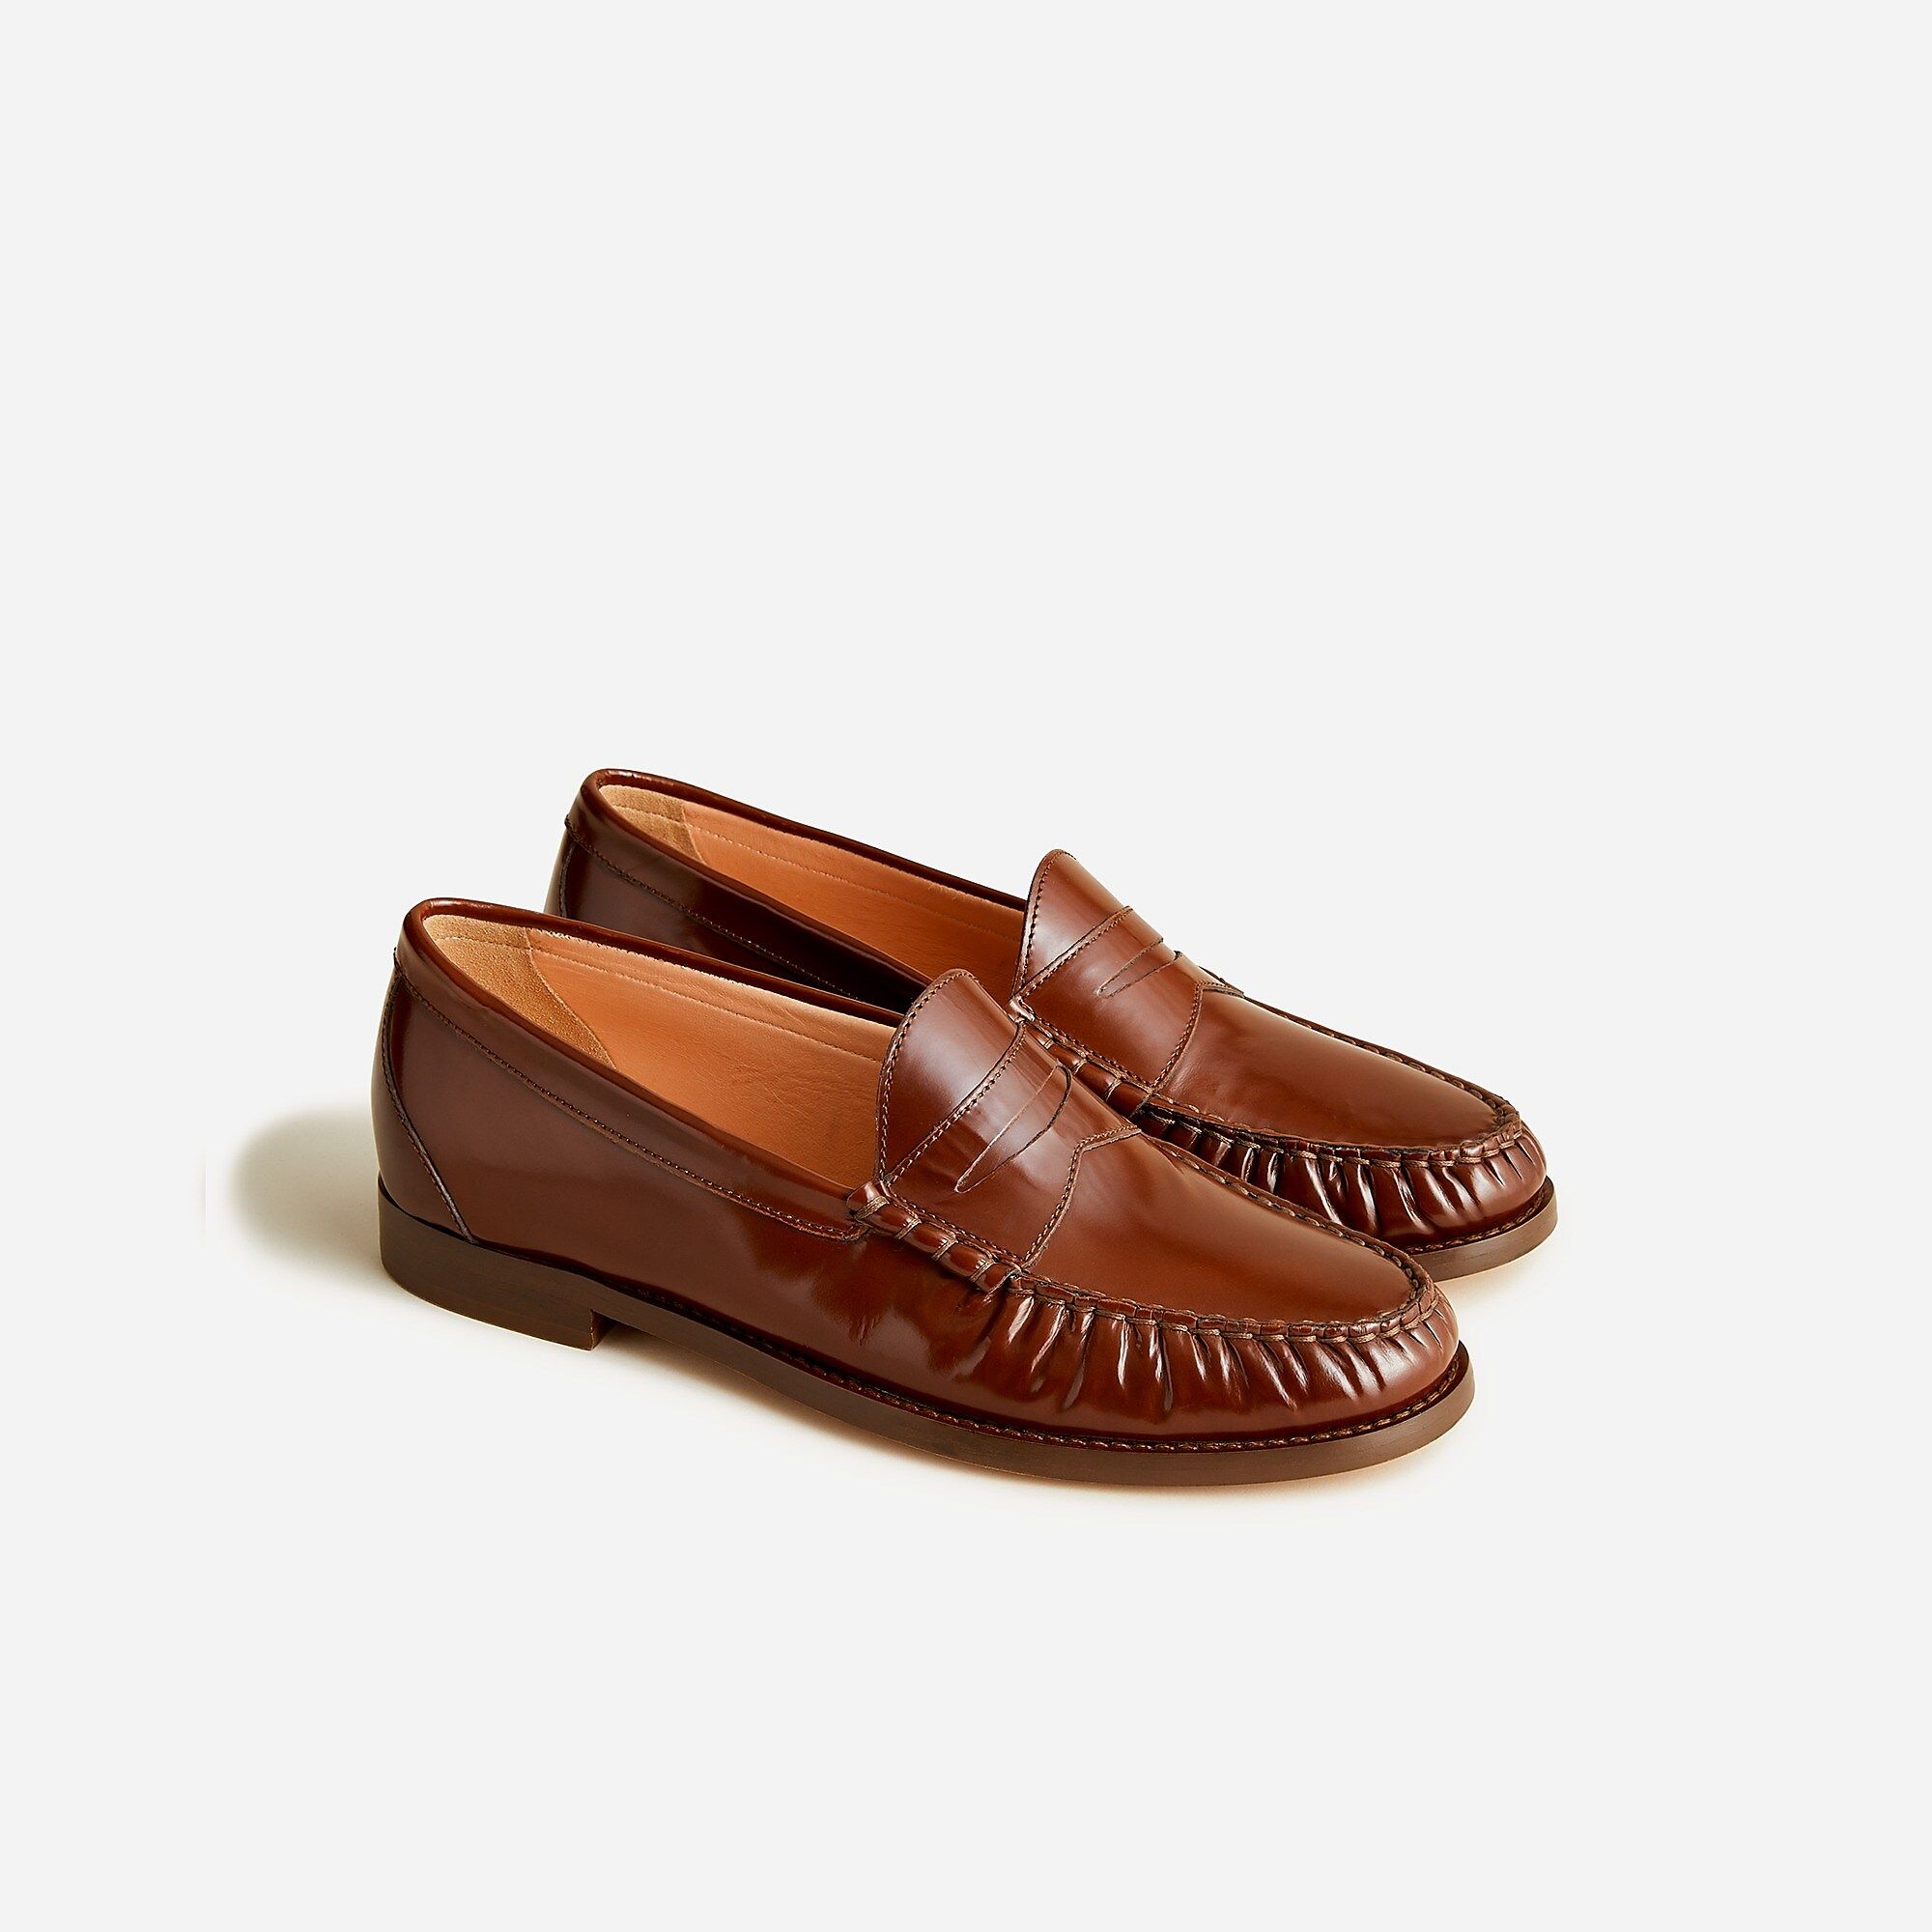 Winona penny loafers in spazzolato leather | J.Crew US